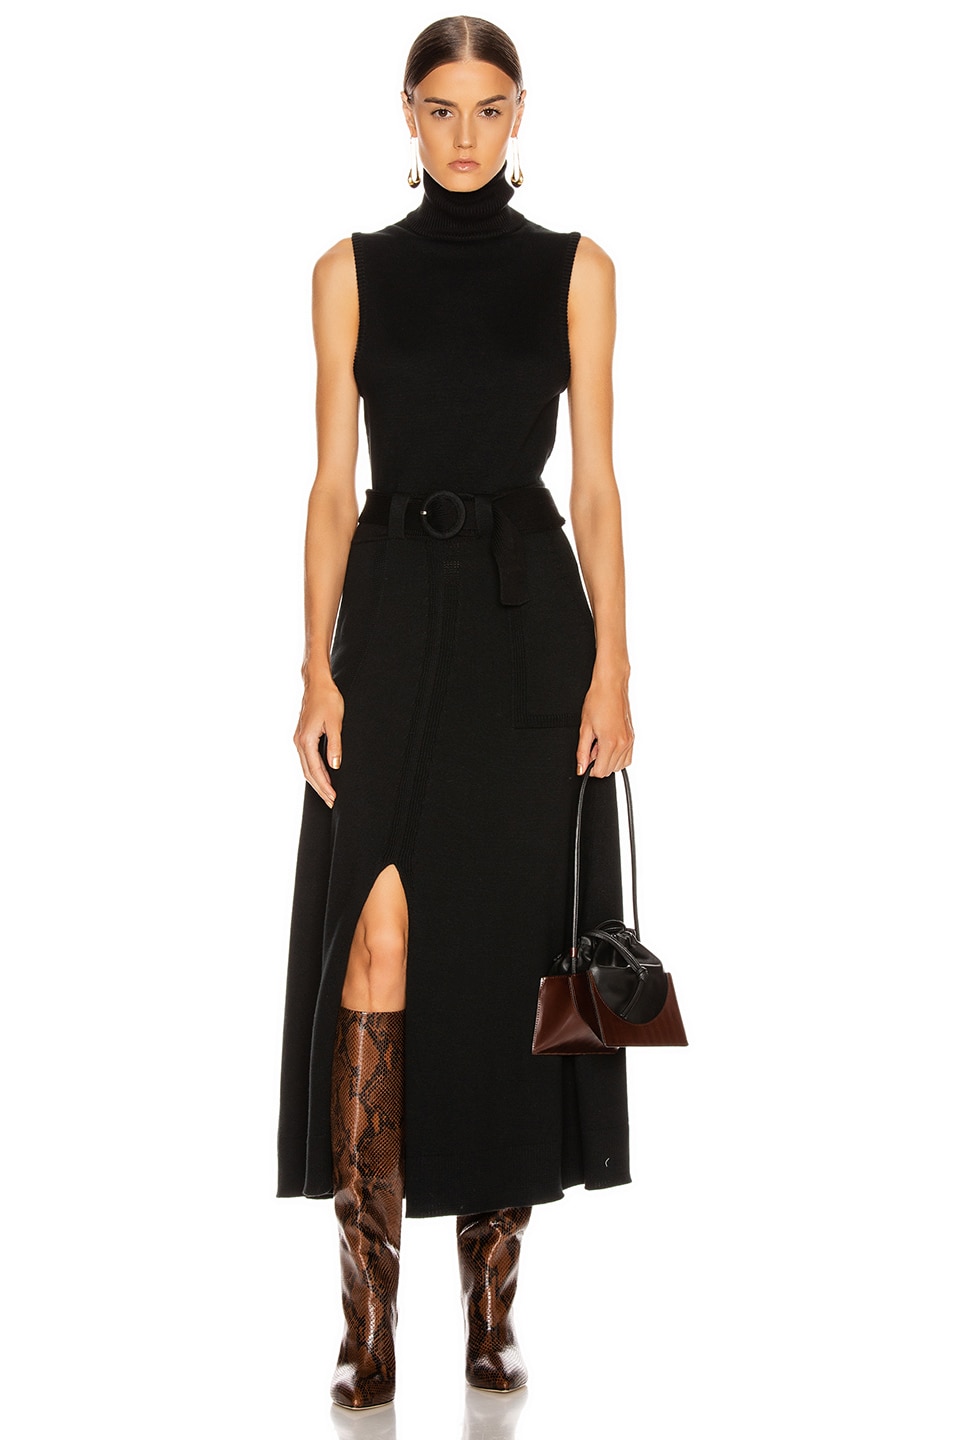 Mara Hoffman Sleeveless Dress in Black | FWRD